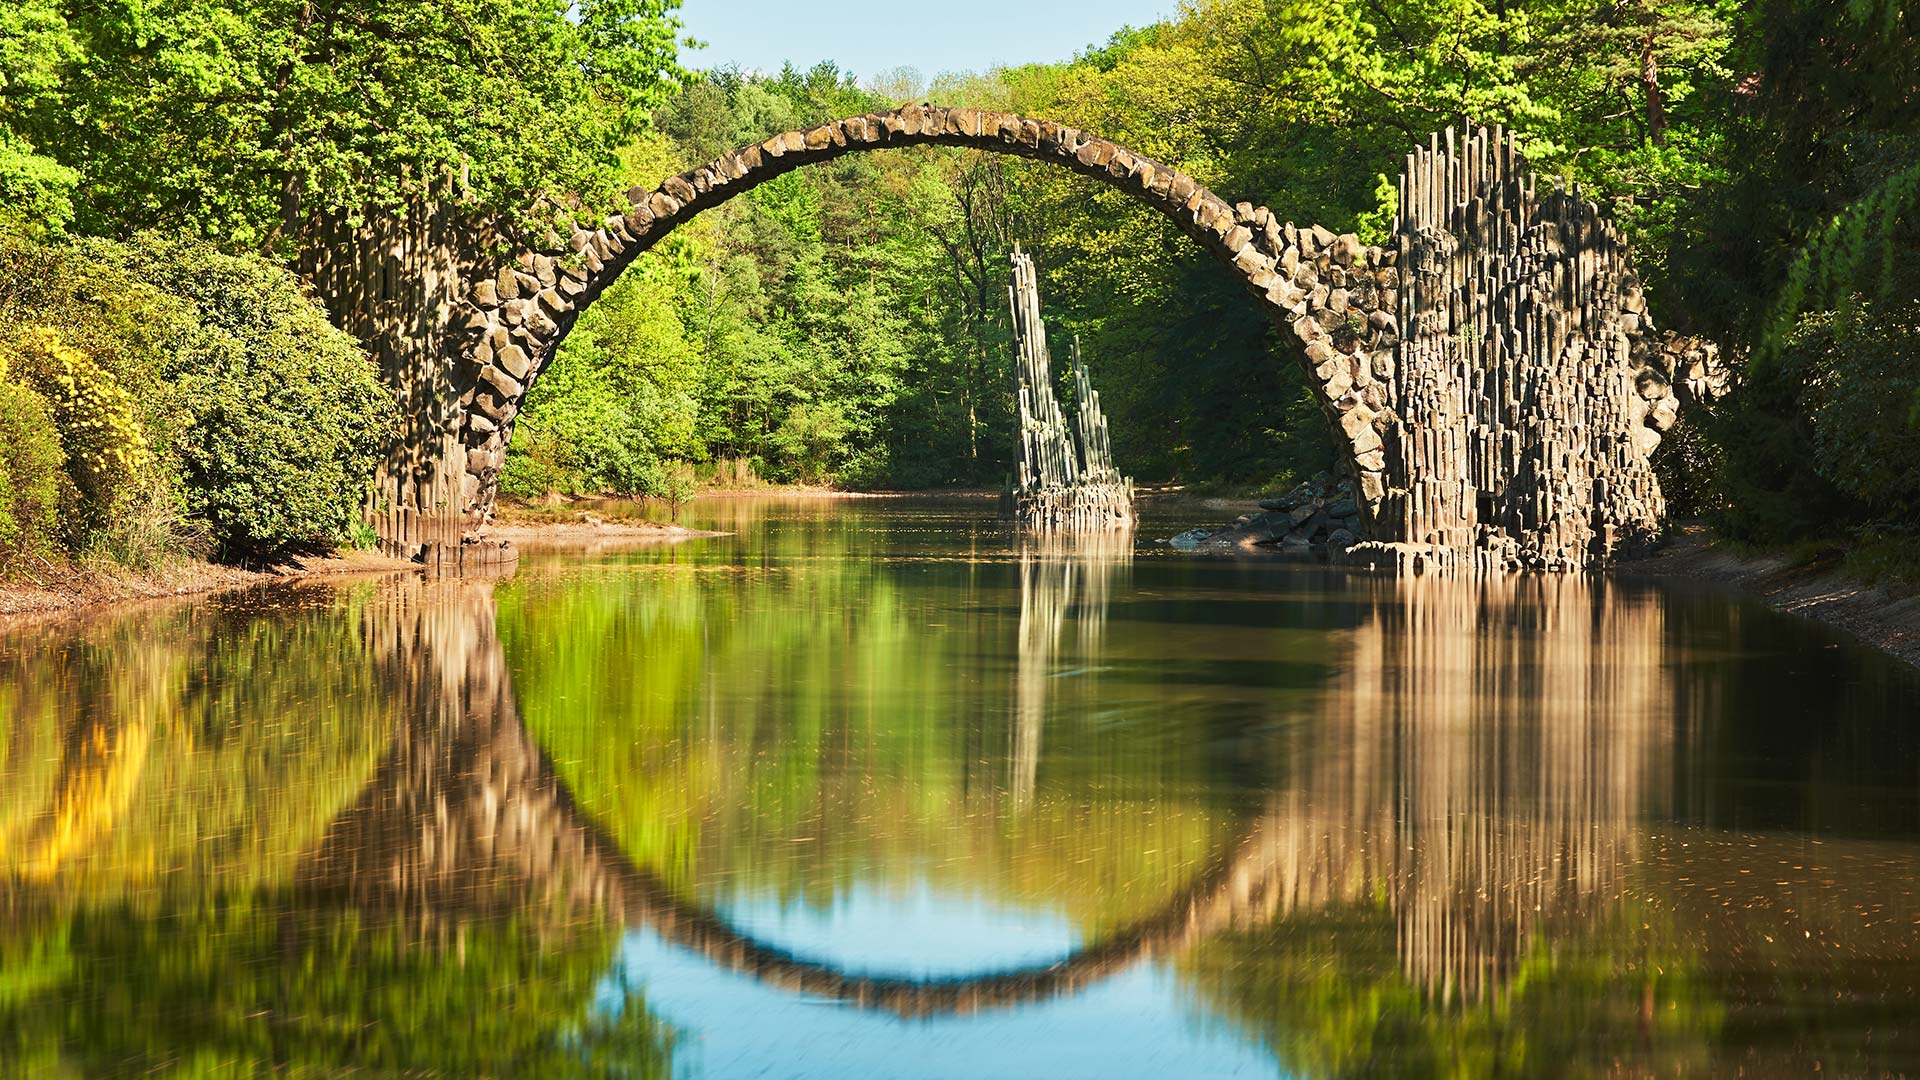 Weak stone bridge over lake in Germany, creating beautiful reflection